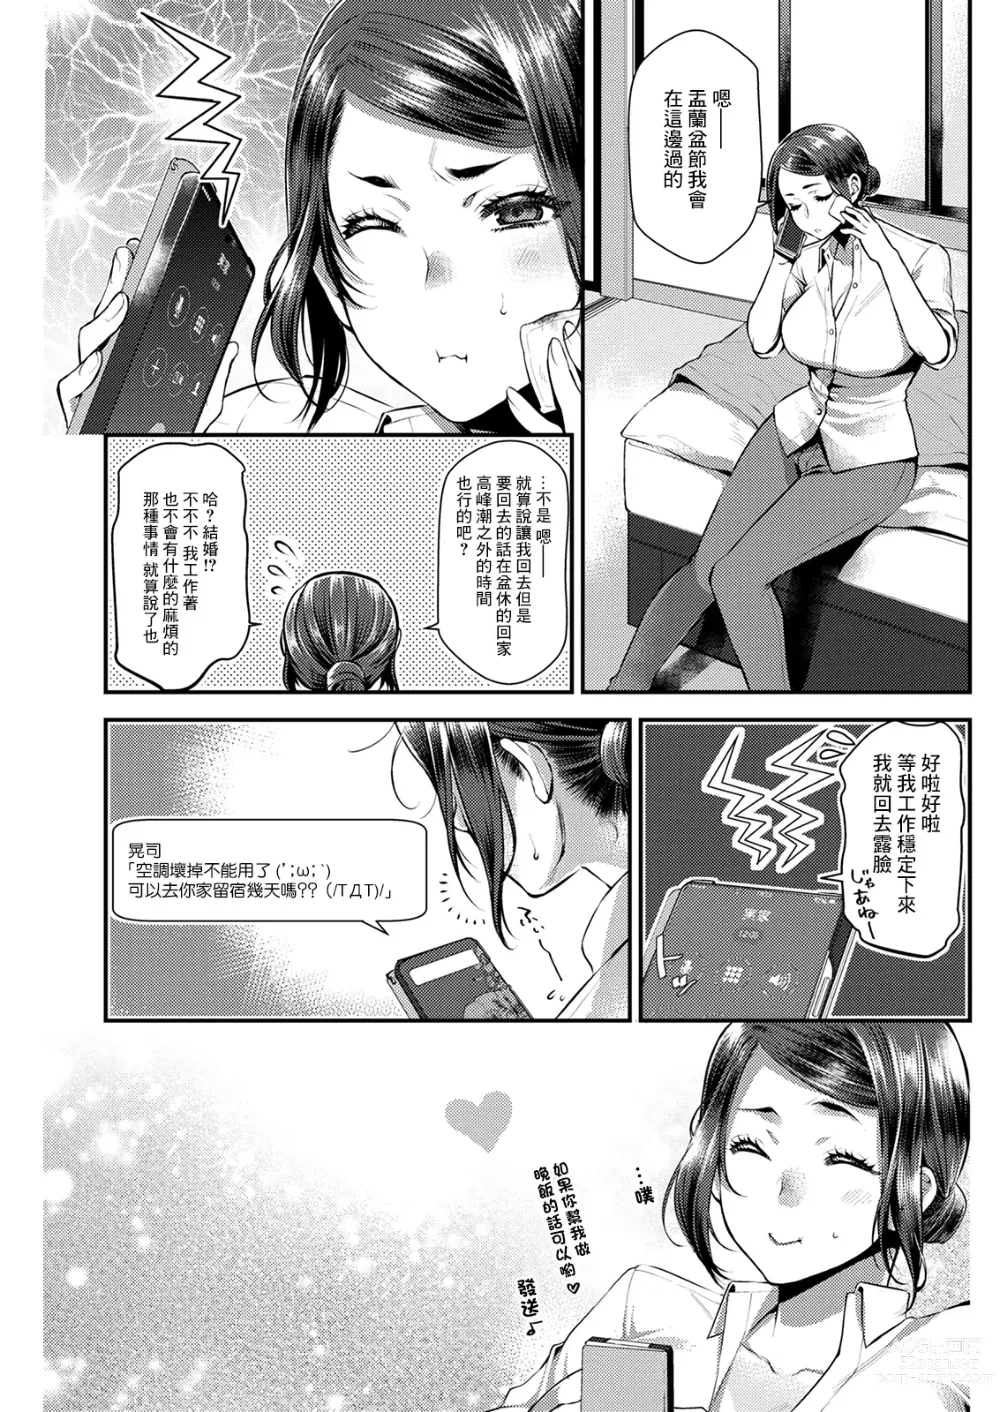 Page 1 of manga Sex x Meshi #4  Soumen  Champloo